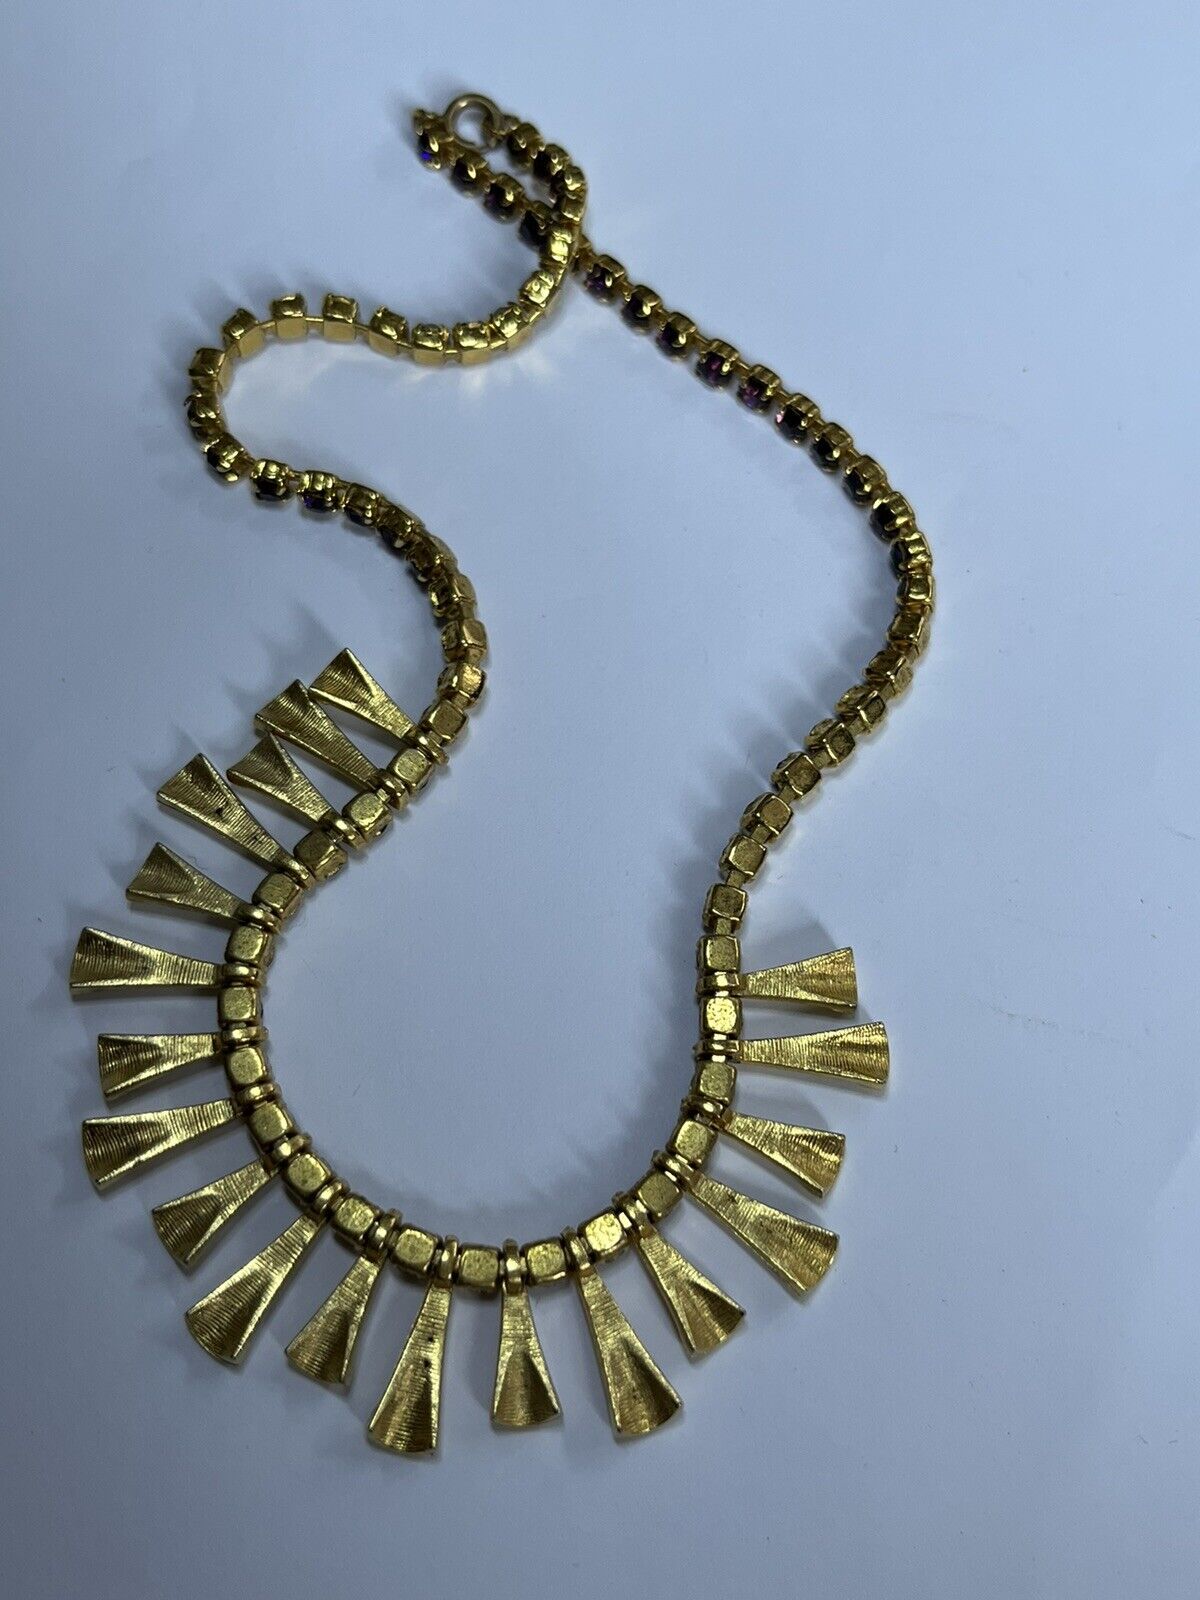 Vintage Frilled Gold Tone Purple Paste Necklace